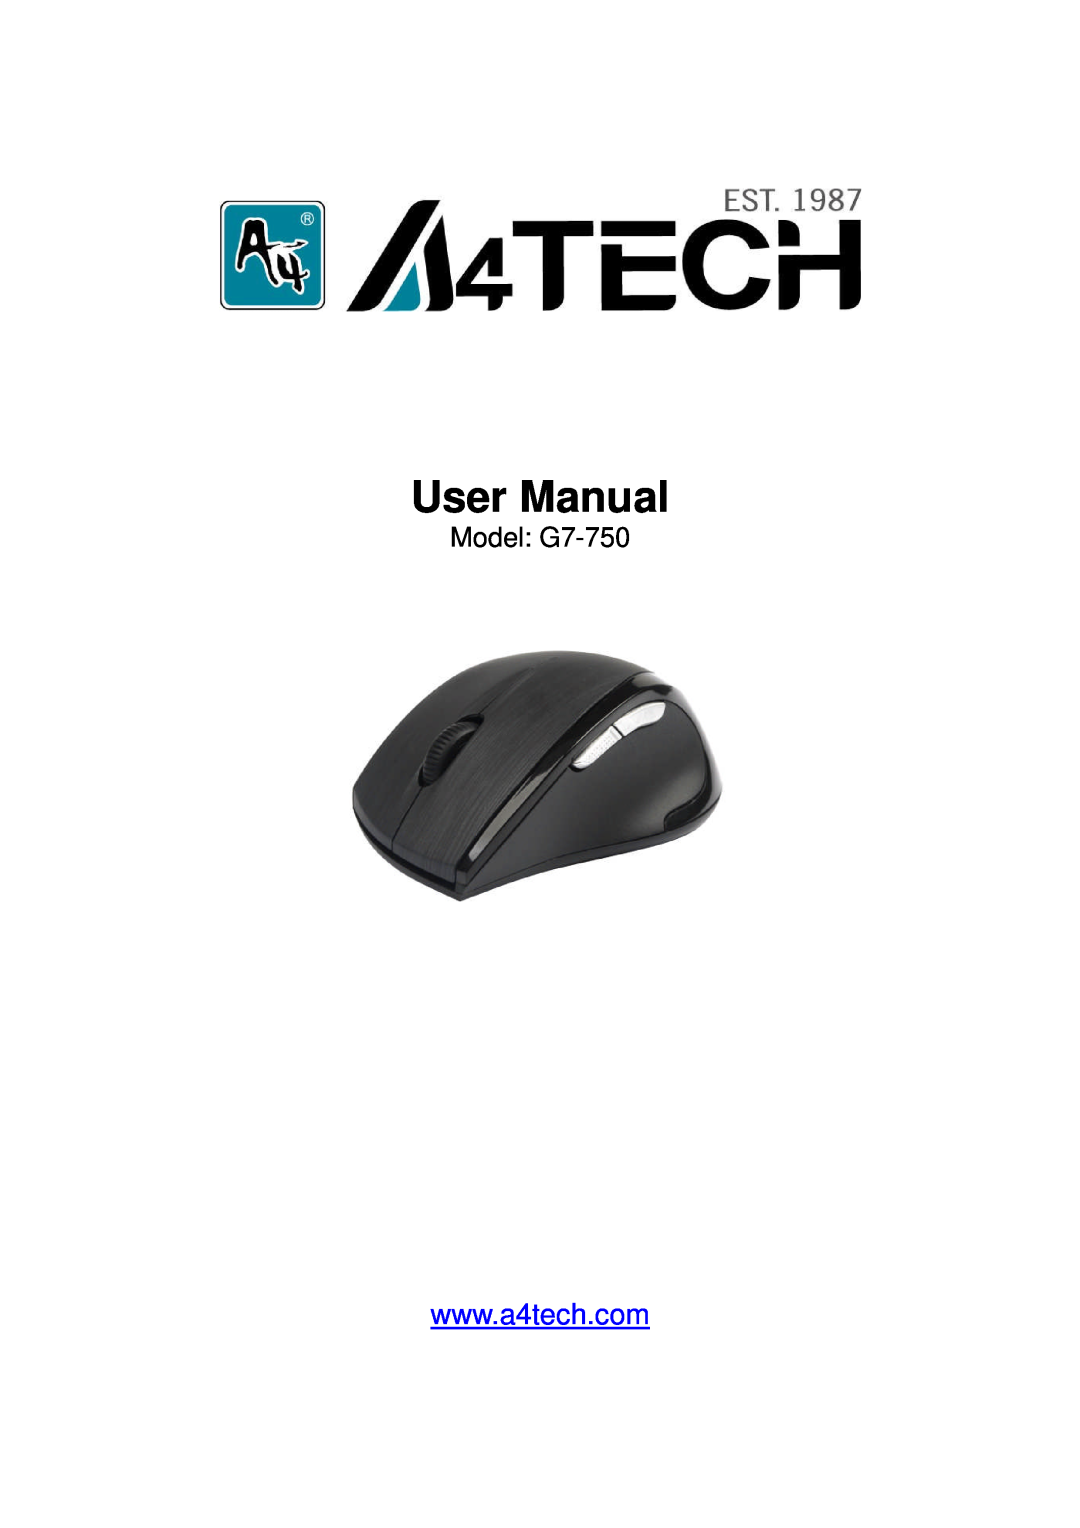 A4 Tech user manual Model G7-750 